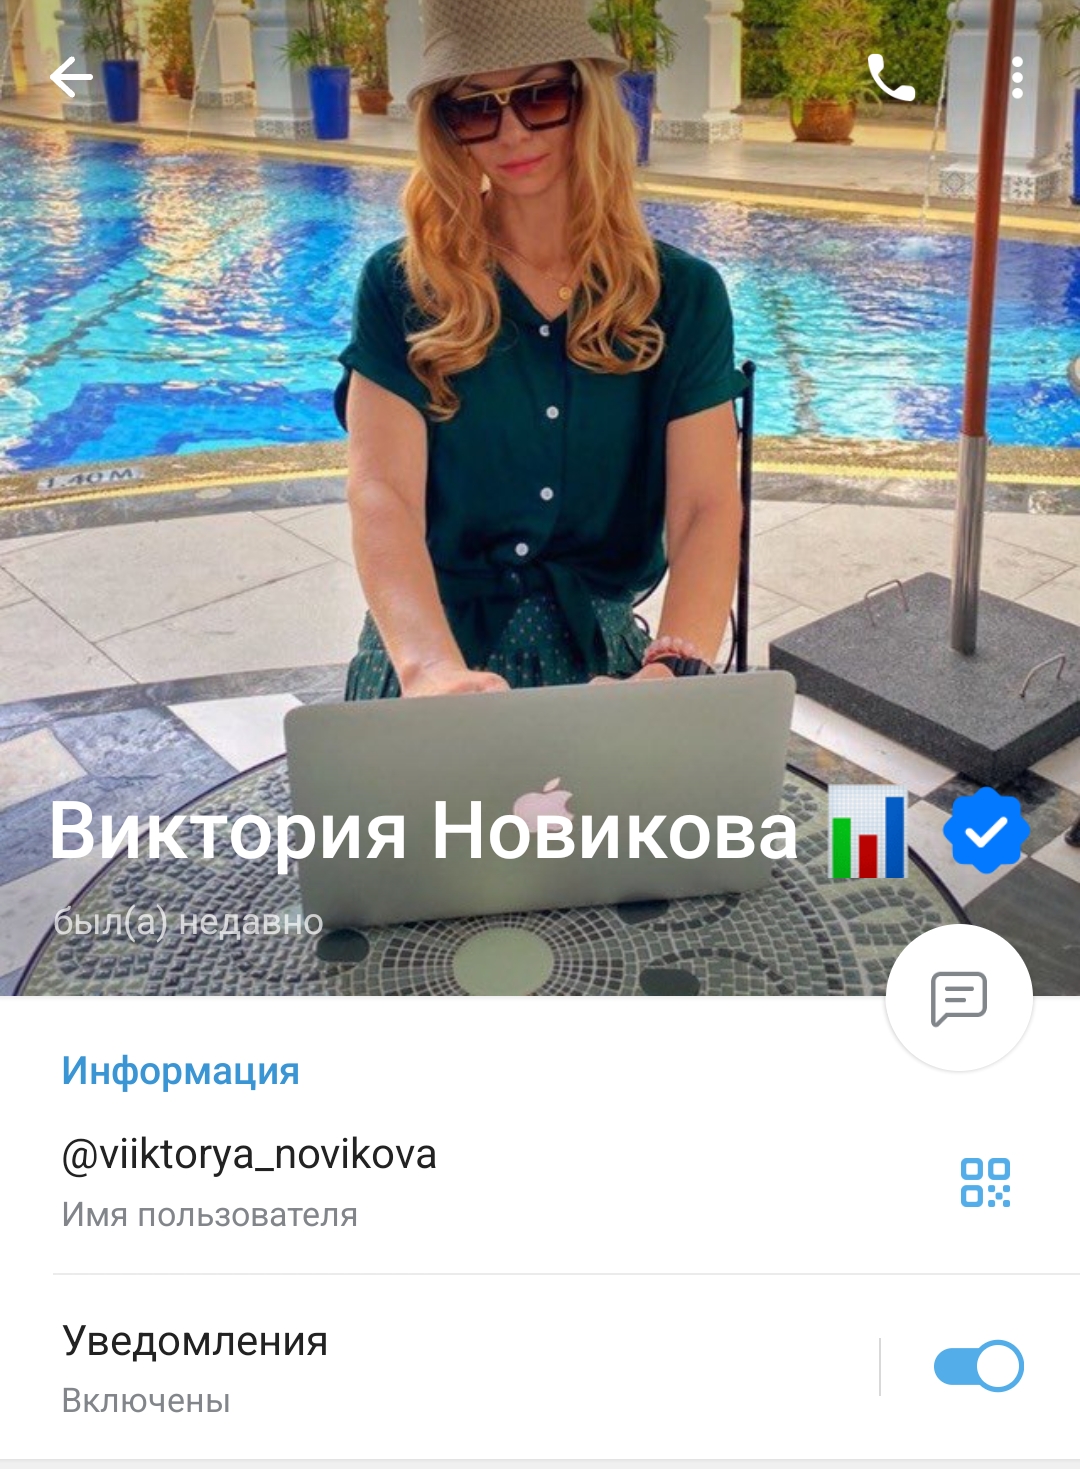 ТГ канал Виктории Новиковой